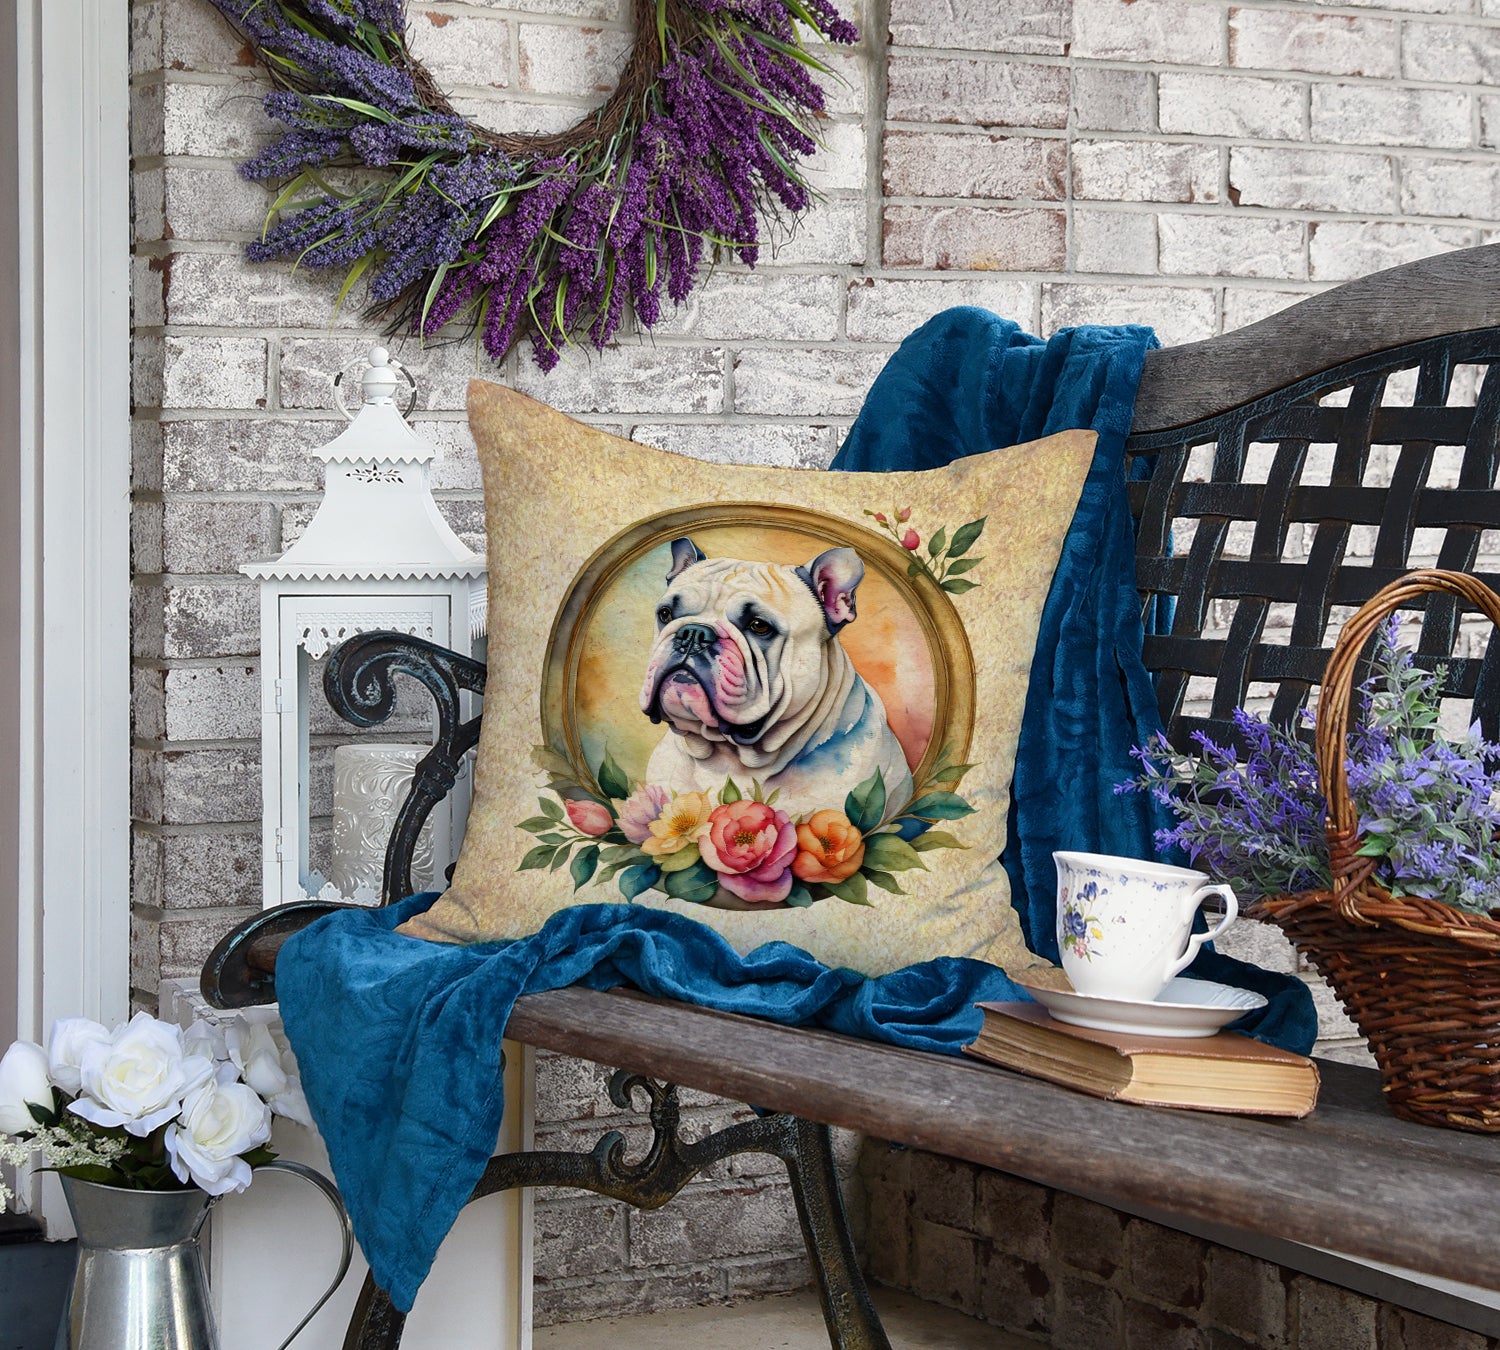 English Bulldog and Flowers Fabric Decorative Pillow